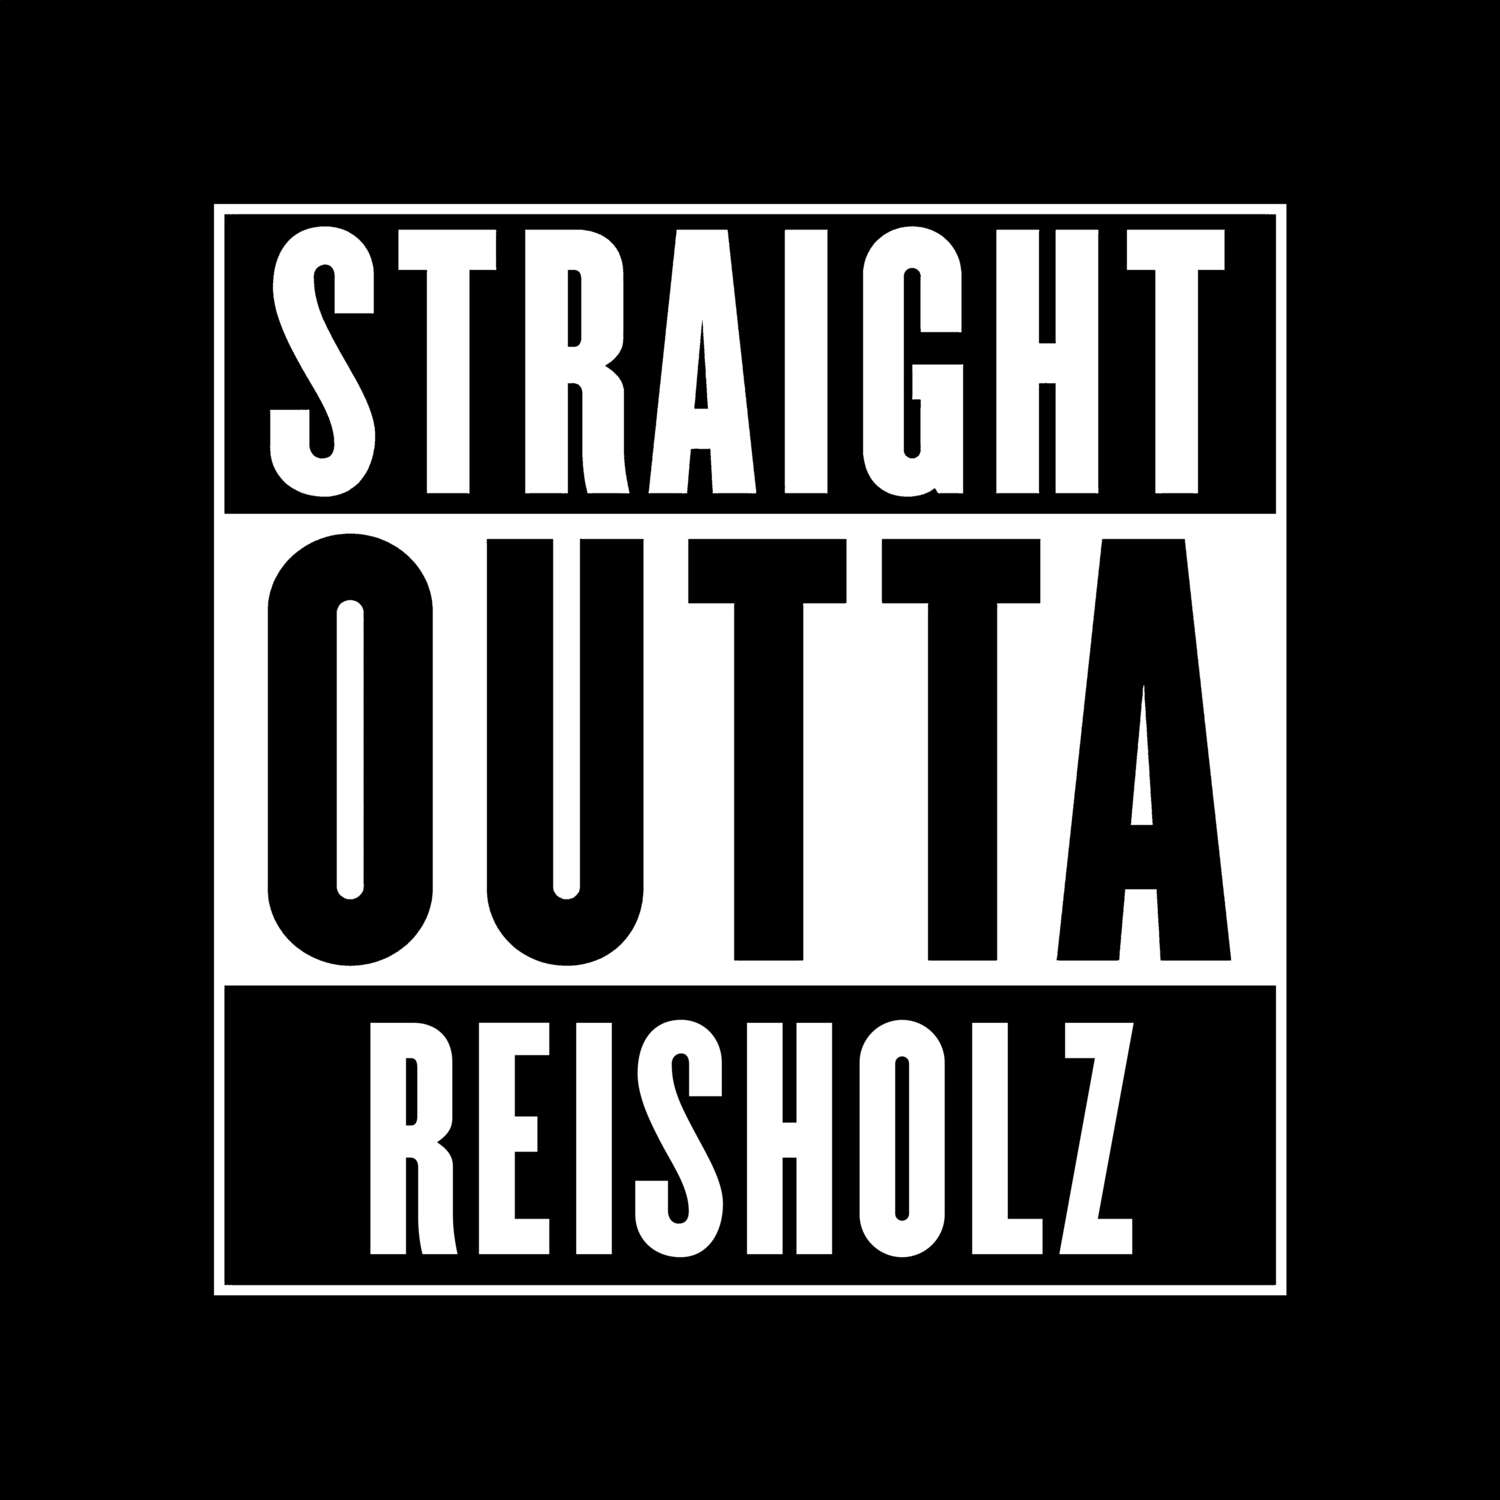 Reisholz T-Shirt »Straight Outta«